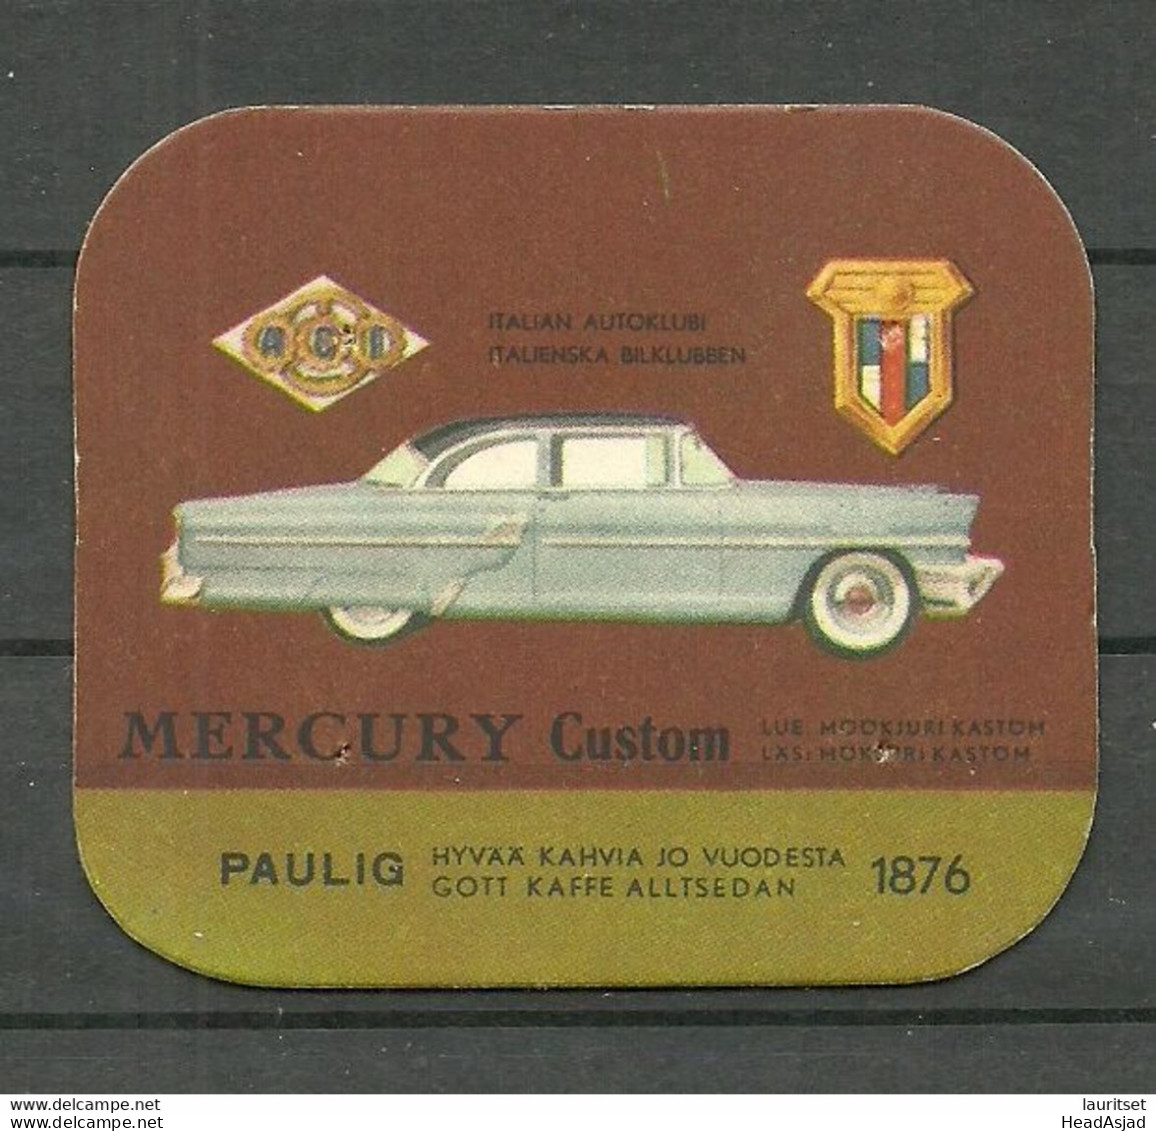 FINLAND Paulig Coffee Collection Card Mercury Custom Italian Auto Car Advertising Reklame Sammelkarte - Voitures